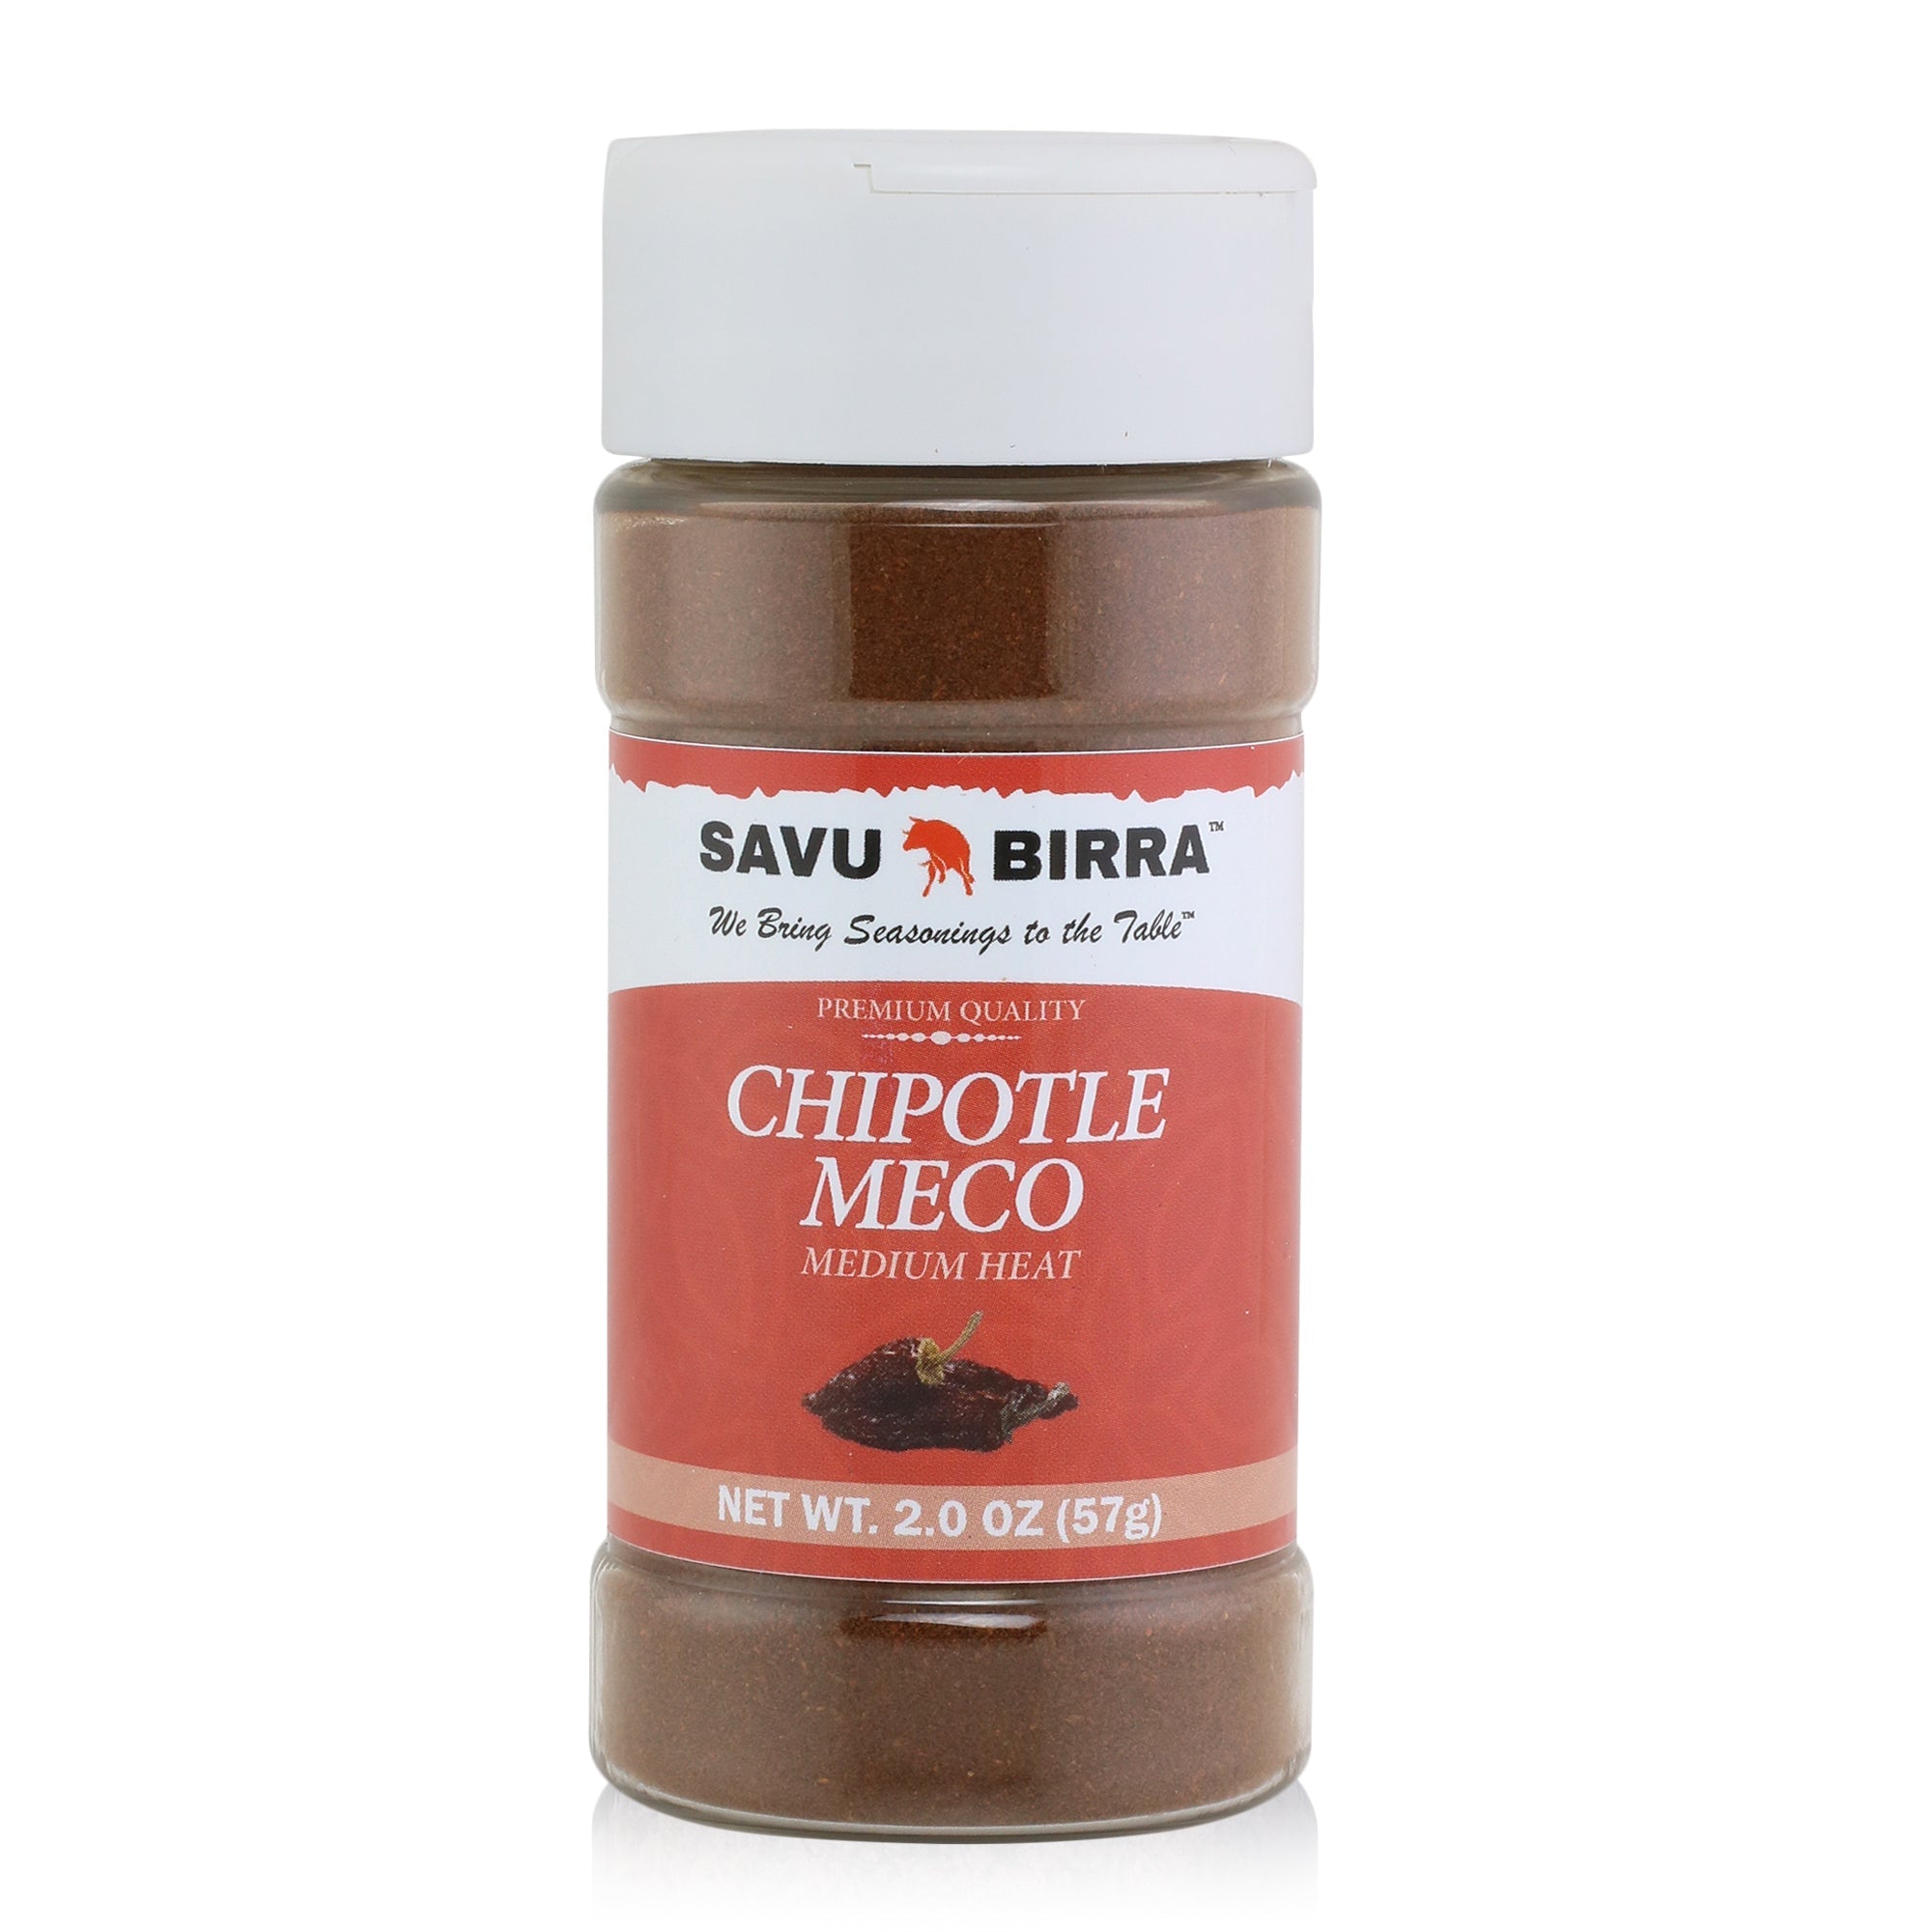 Chipotle Meco Chile PepperSavu Birra LLC